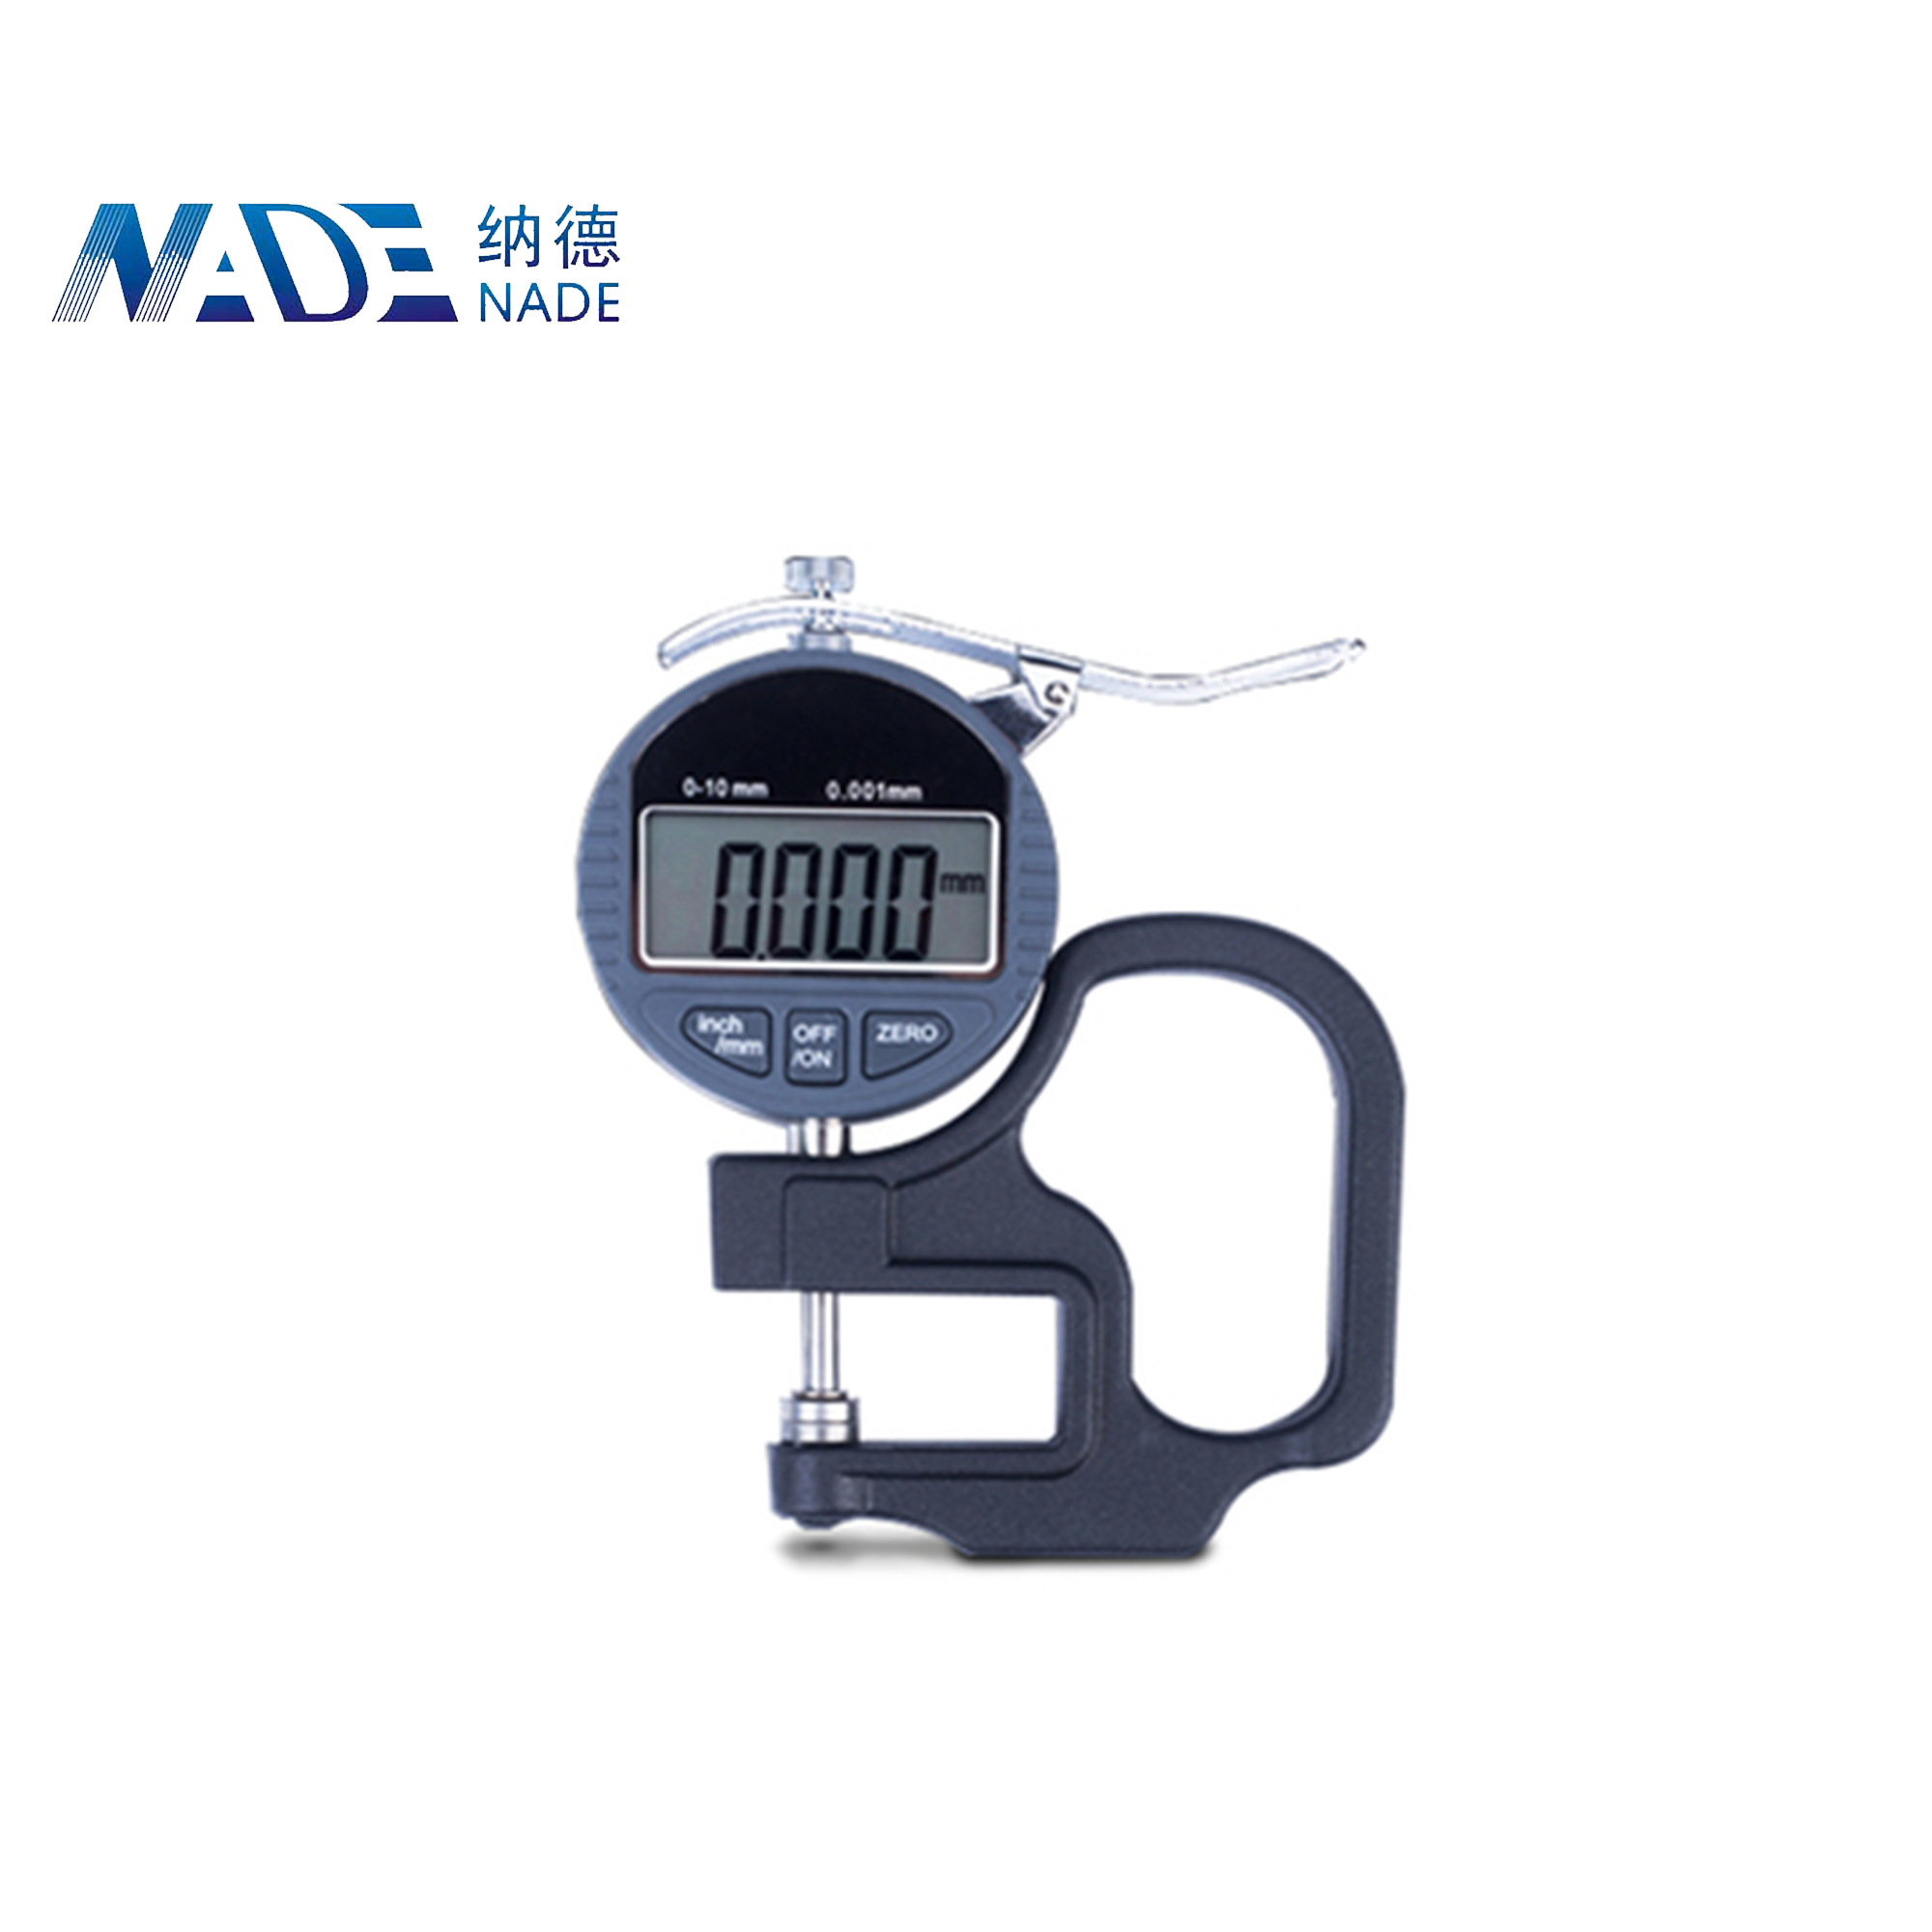 Nade LS-4 Leaf/Blade Thickness Meter measuring range 0--17mm